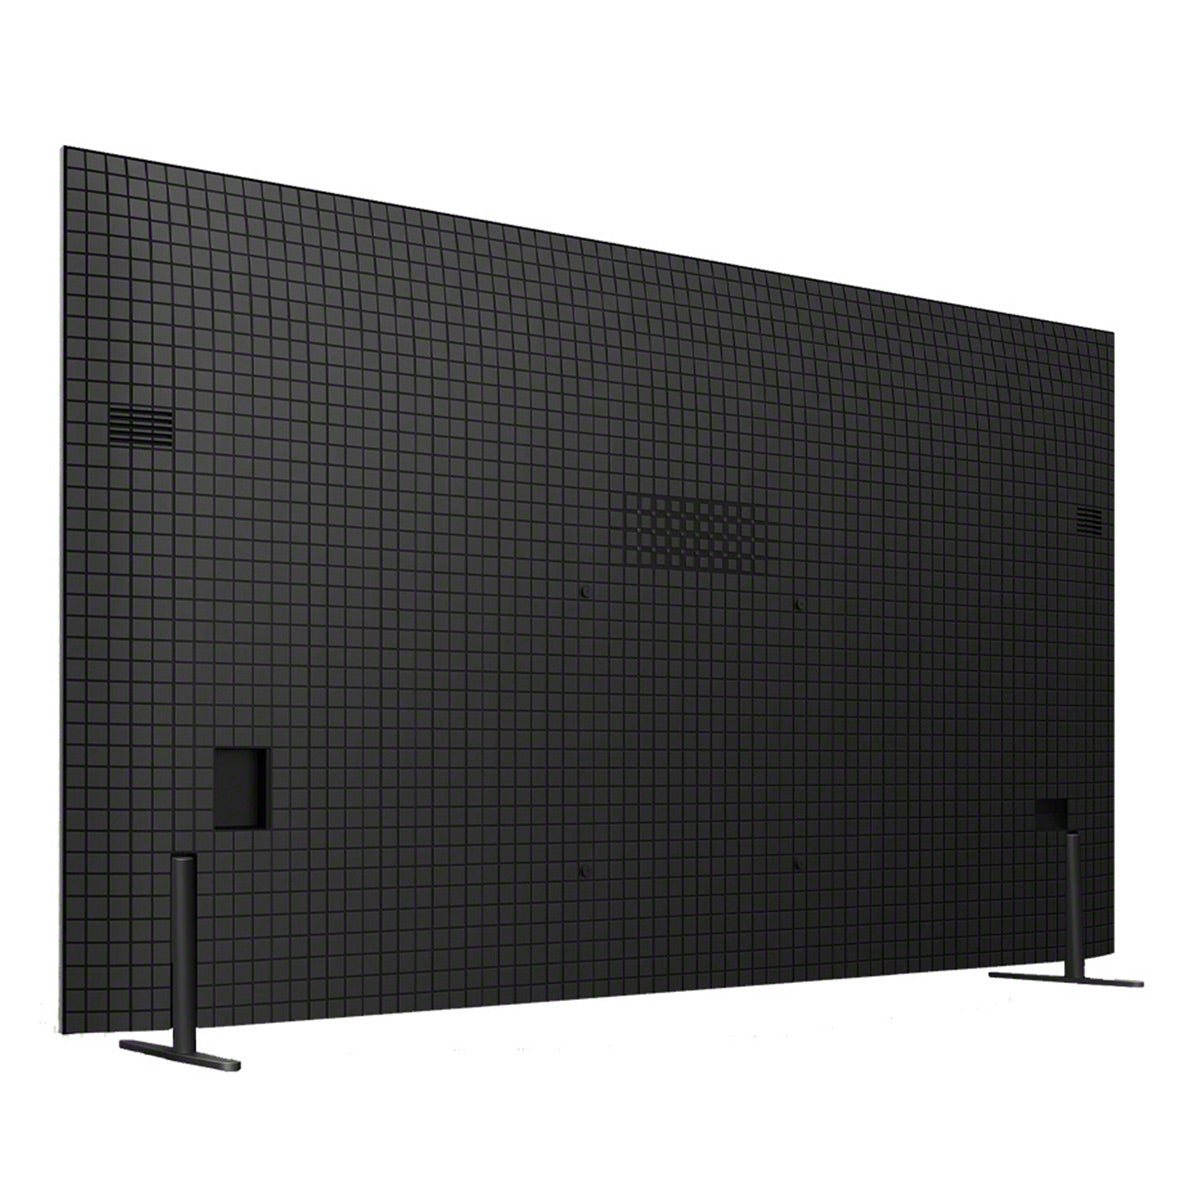 Sony K65XR80 BRAVIA 8 65" 4K OLED Smart TV (2024)